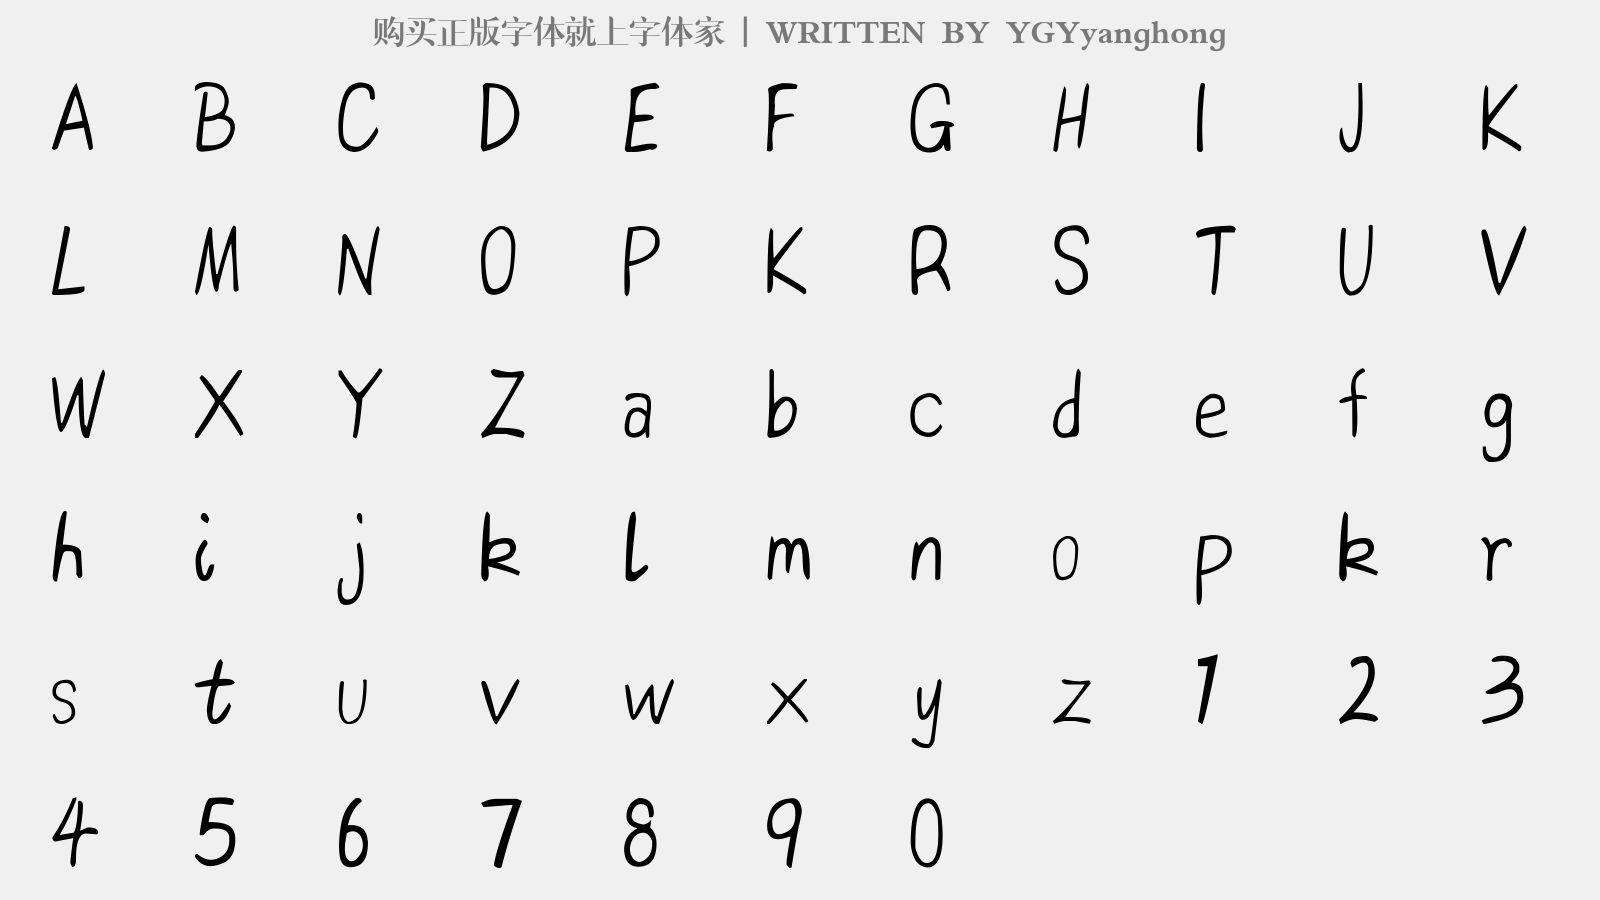 YGYyanghong - 大写字母/小写字母/数字